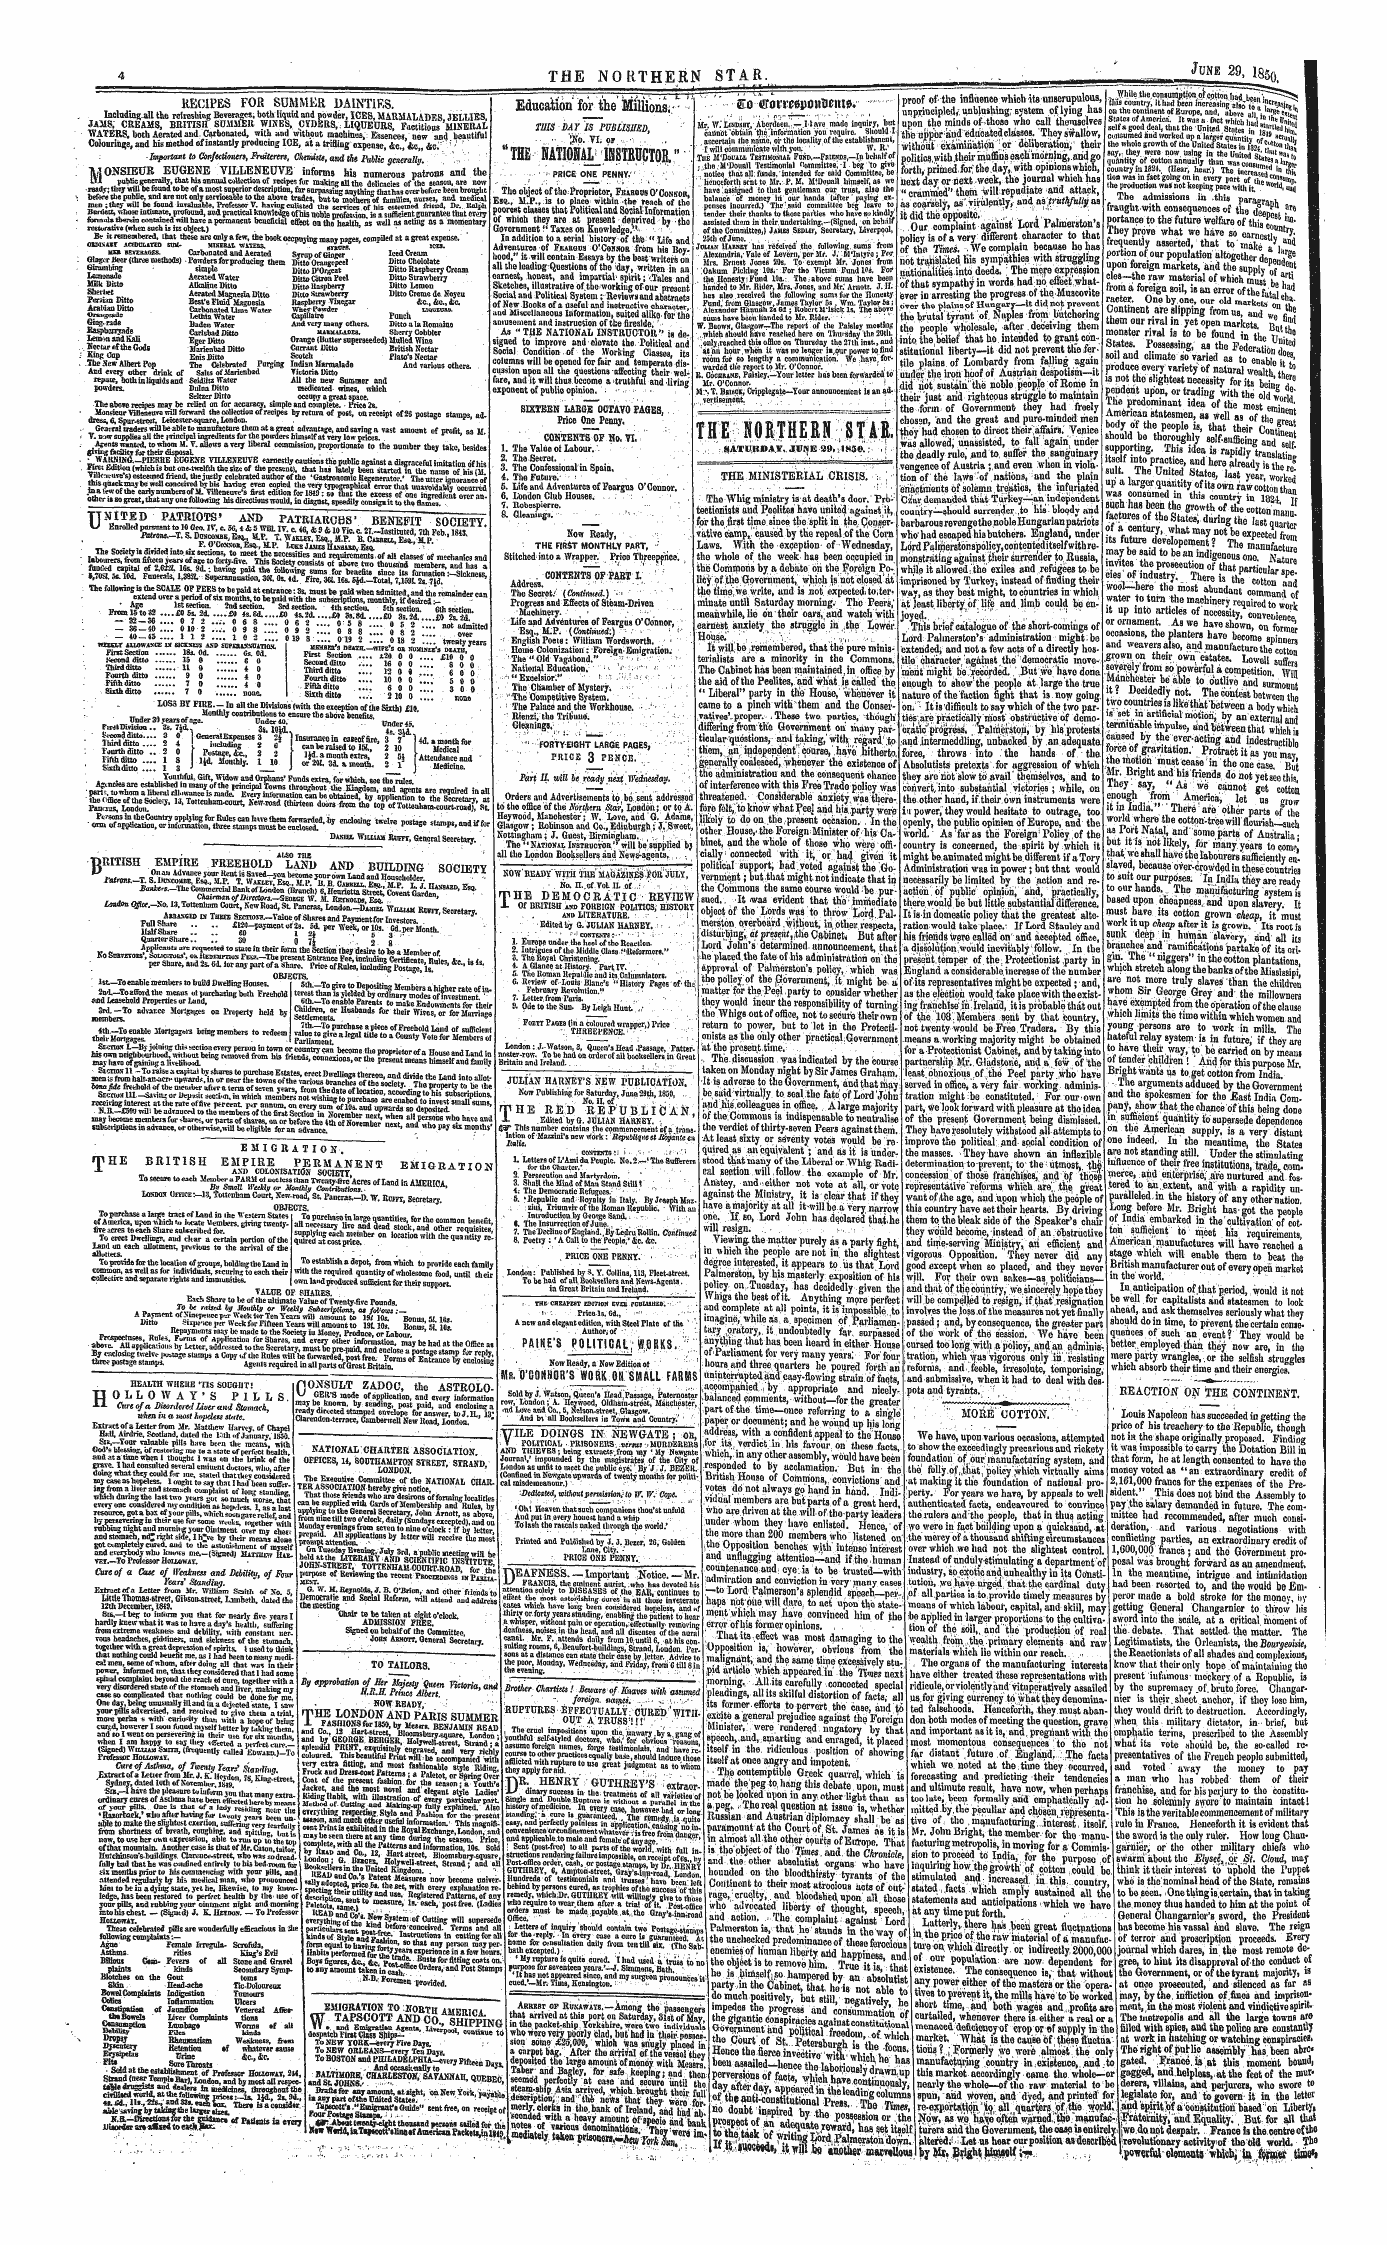 Northern Star (1837-1852): jS F Y, 1st edition - The Hoiitherk Star.. ' ,. Sa'l'Ukda. Y,. June 29, :1h5o.: .J